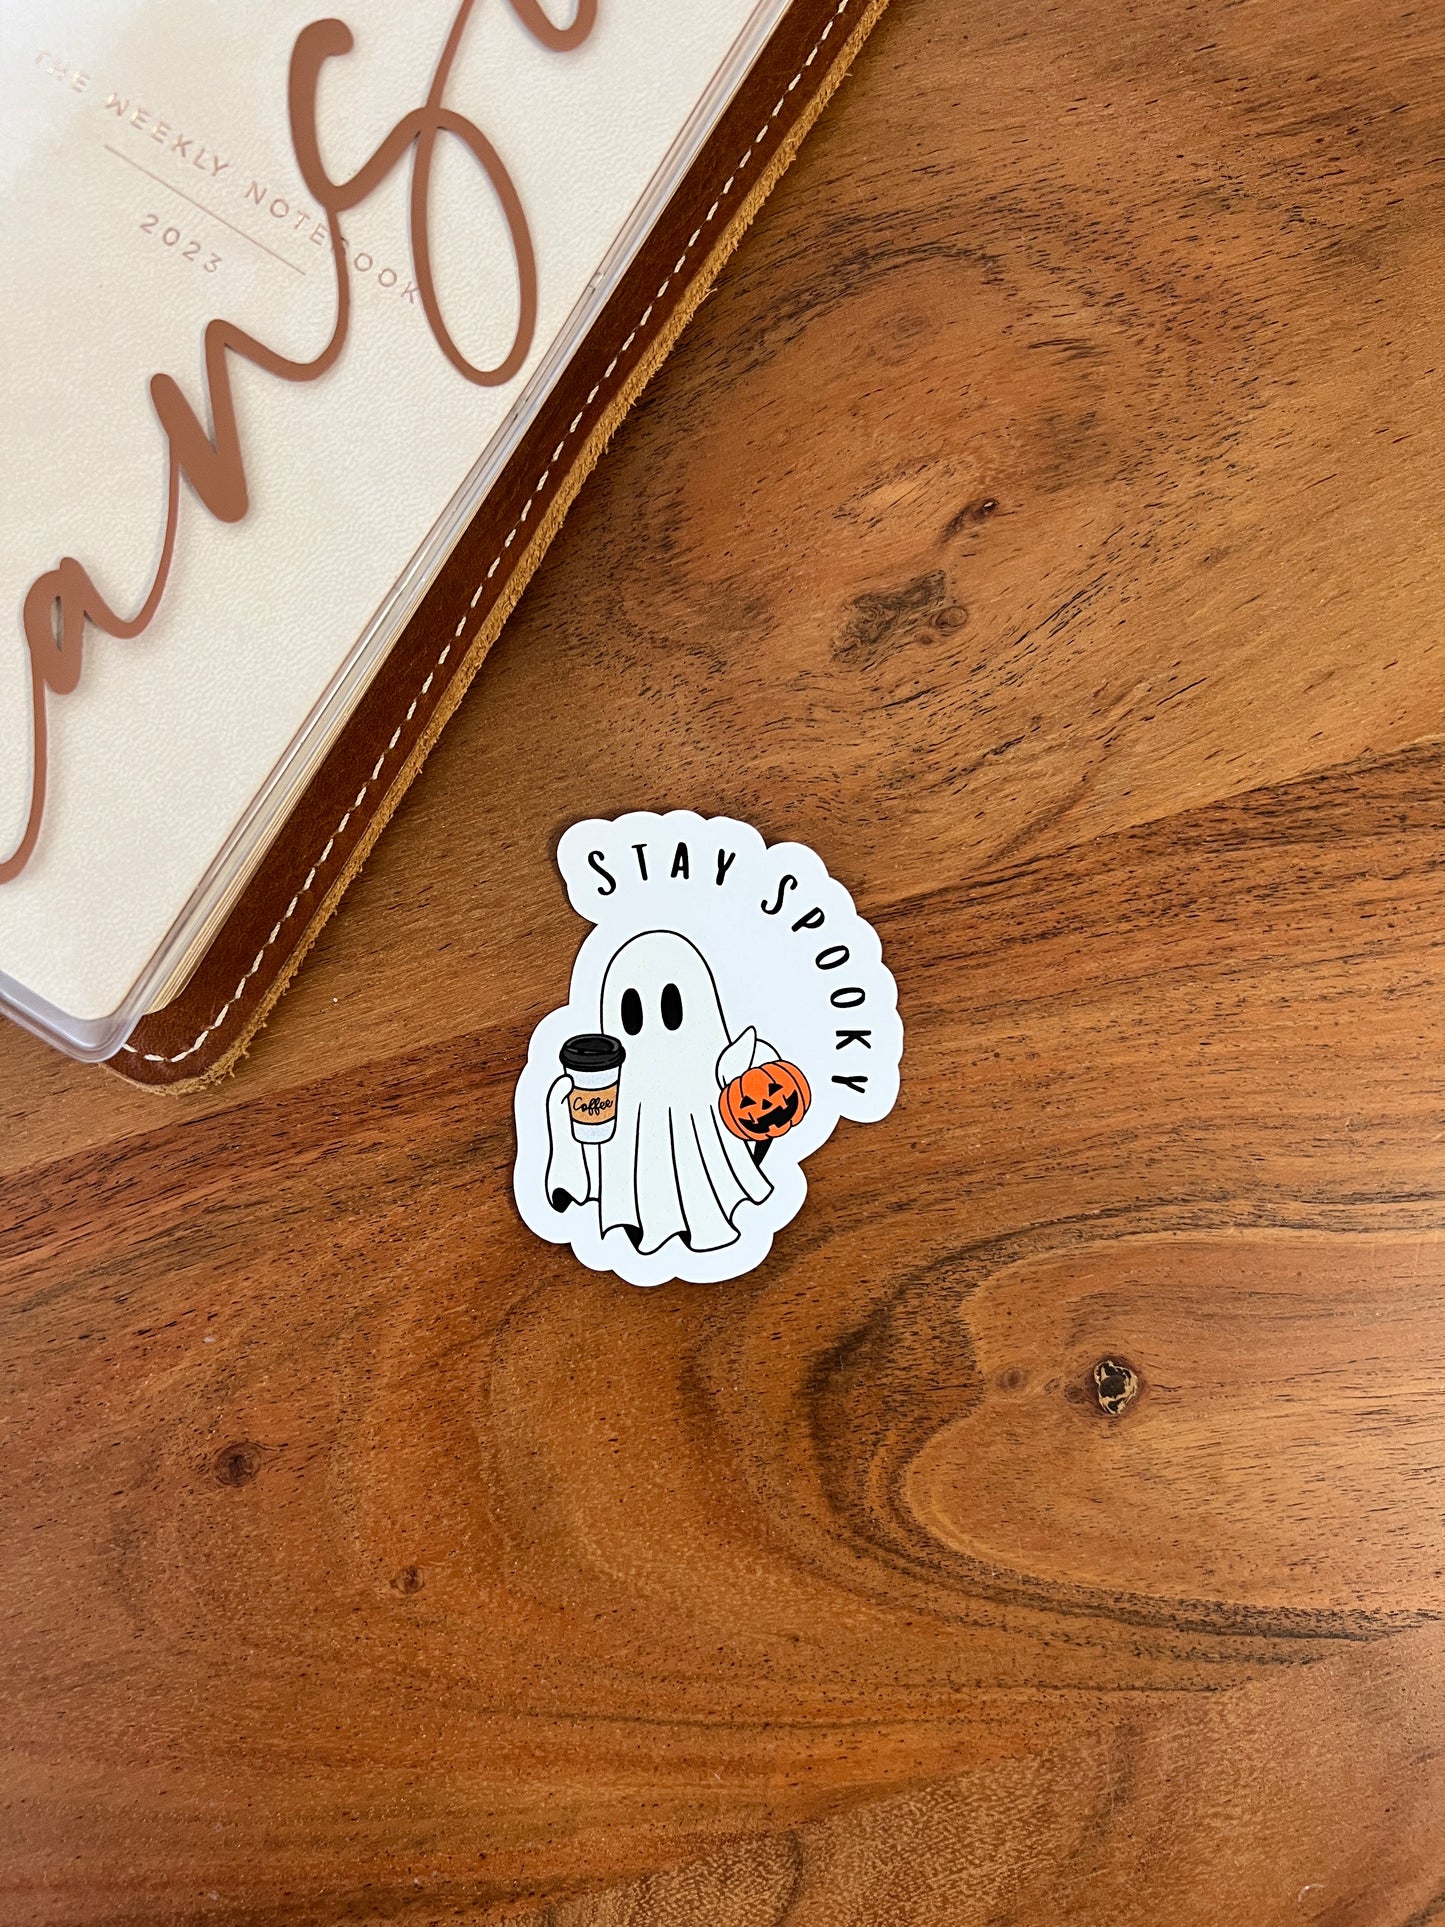 Stay spooky Ghost“ Die Cuts (Stickers) • White Vinyl Matte